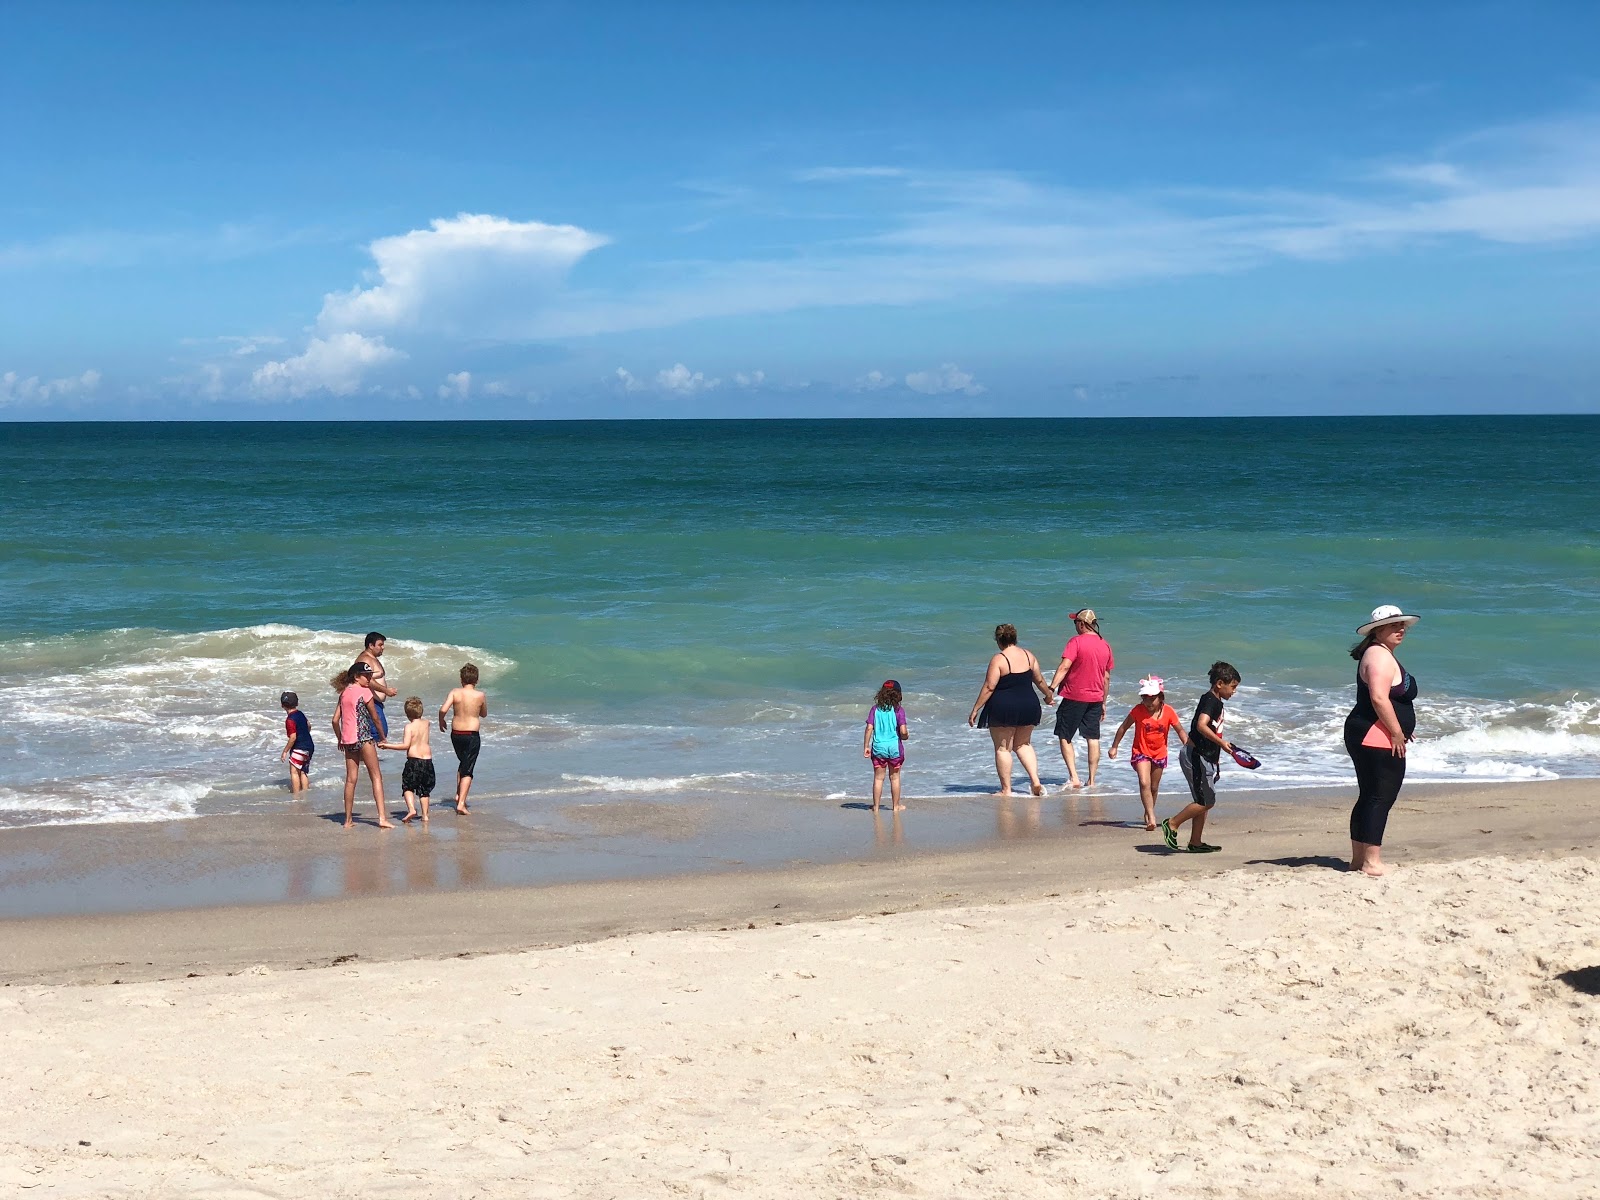 Foto de Vero beach - lugar popular entre os apreciadores de relaxamento